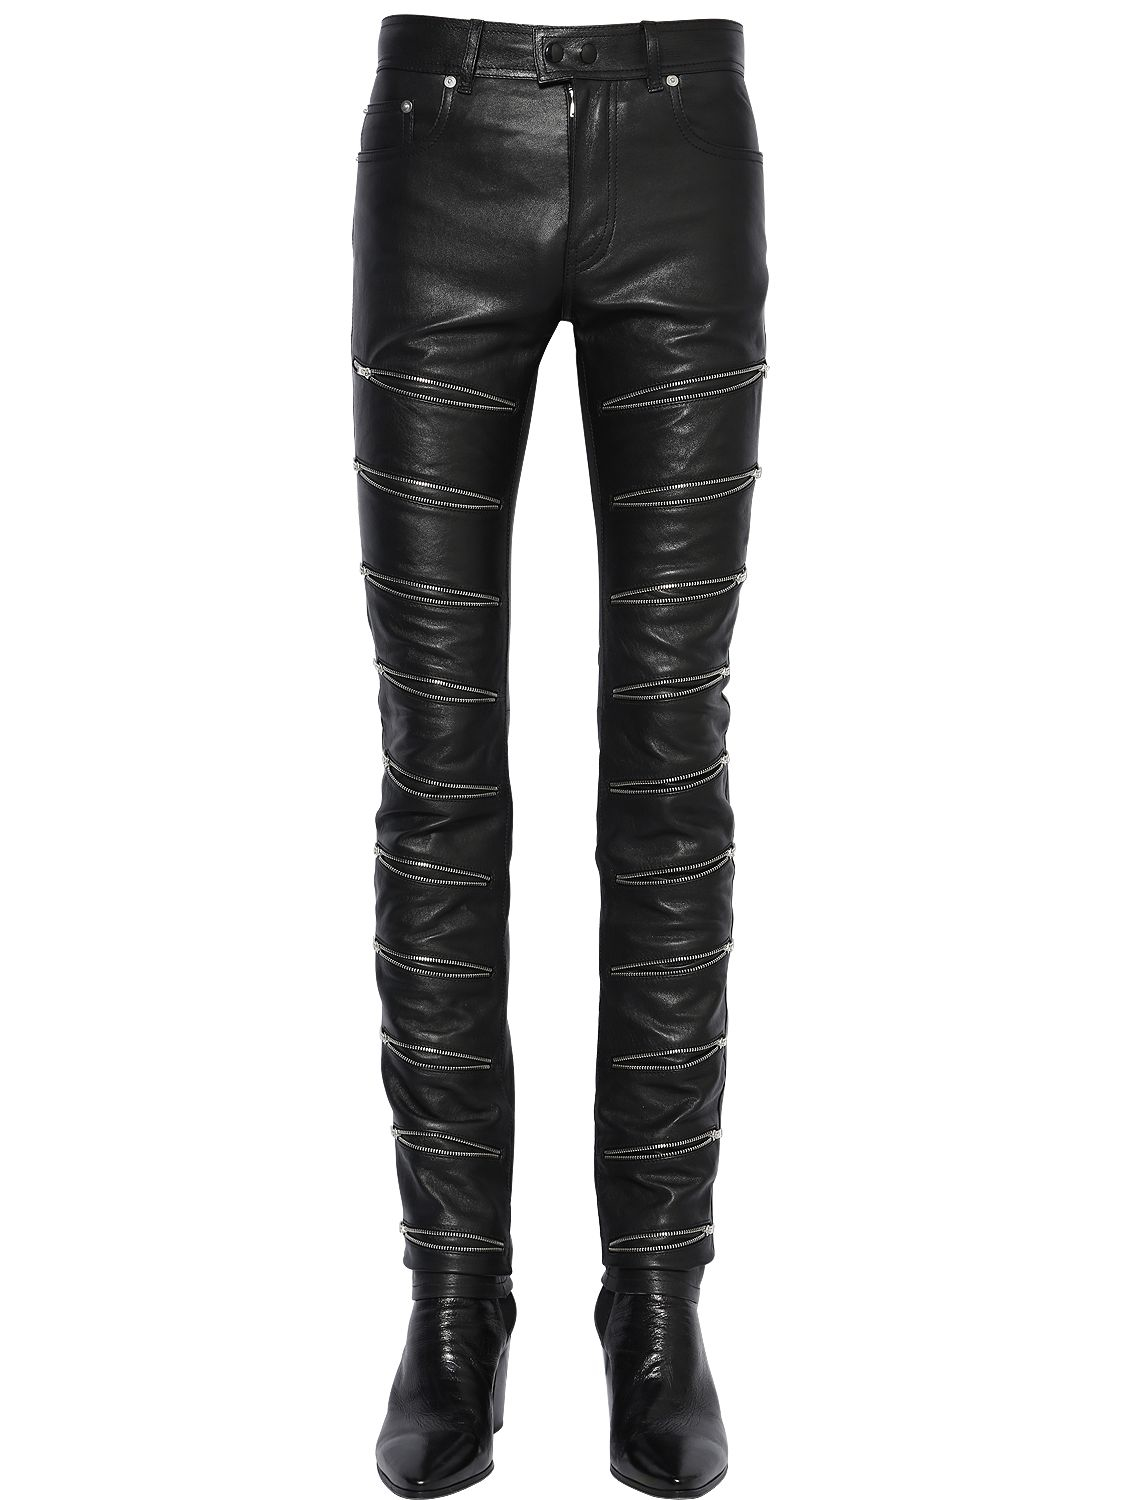 Lyst - Saint Laurent 15cm Multi Zip Nappa Leather Pants in Black for Men